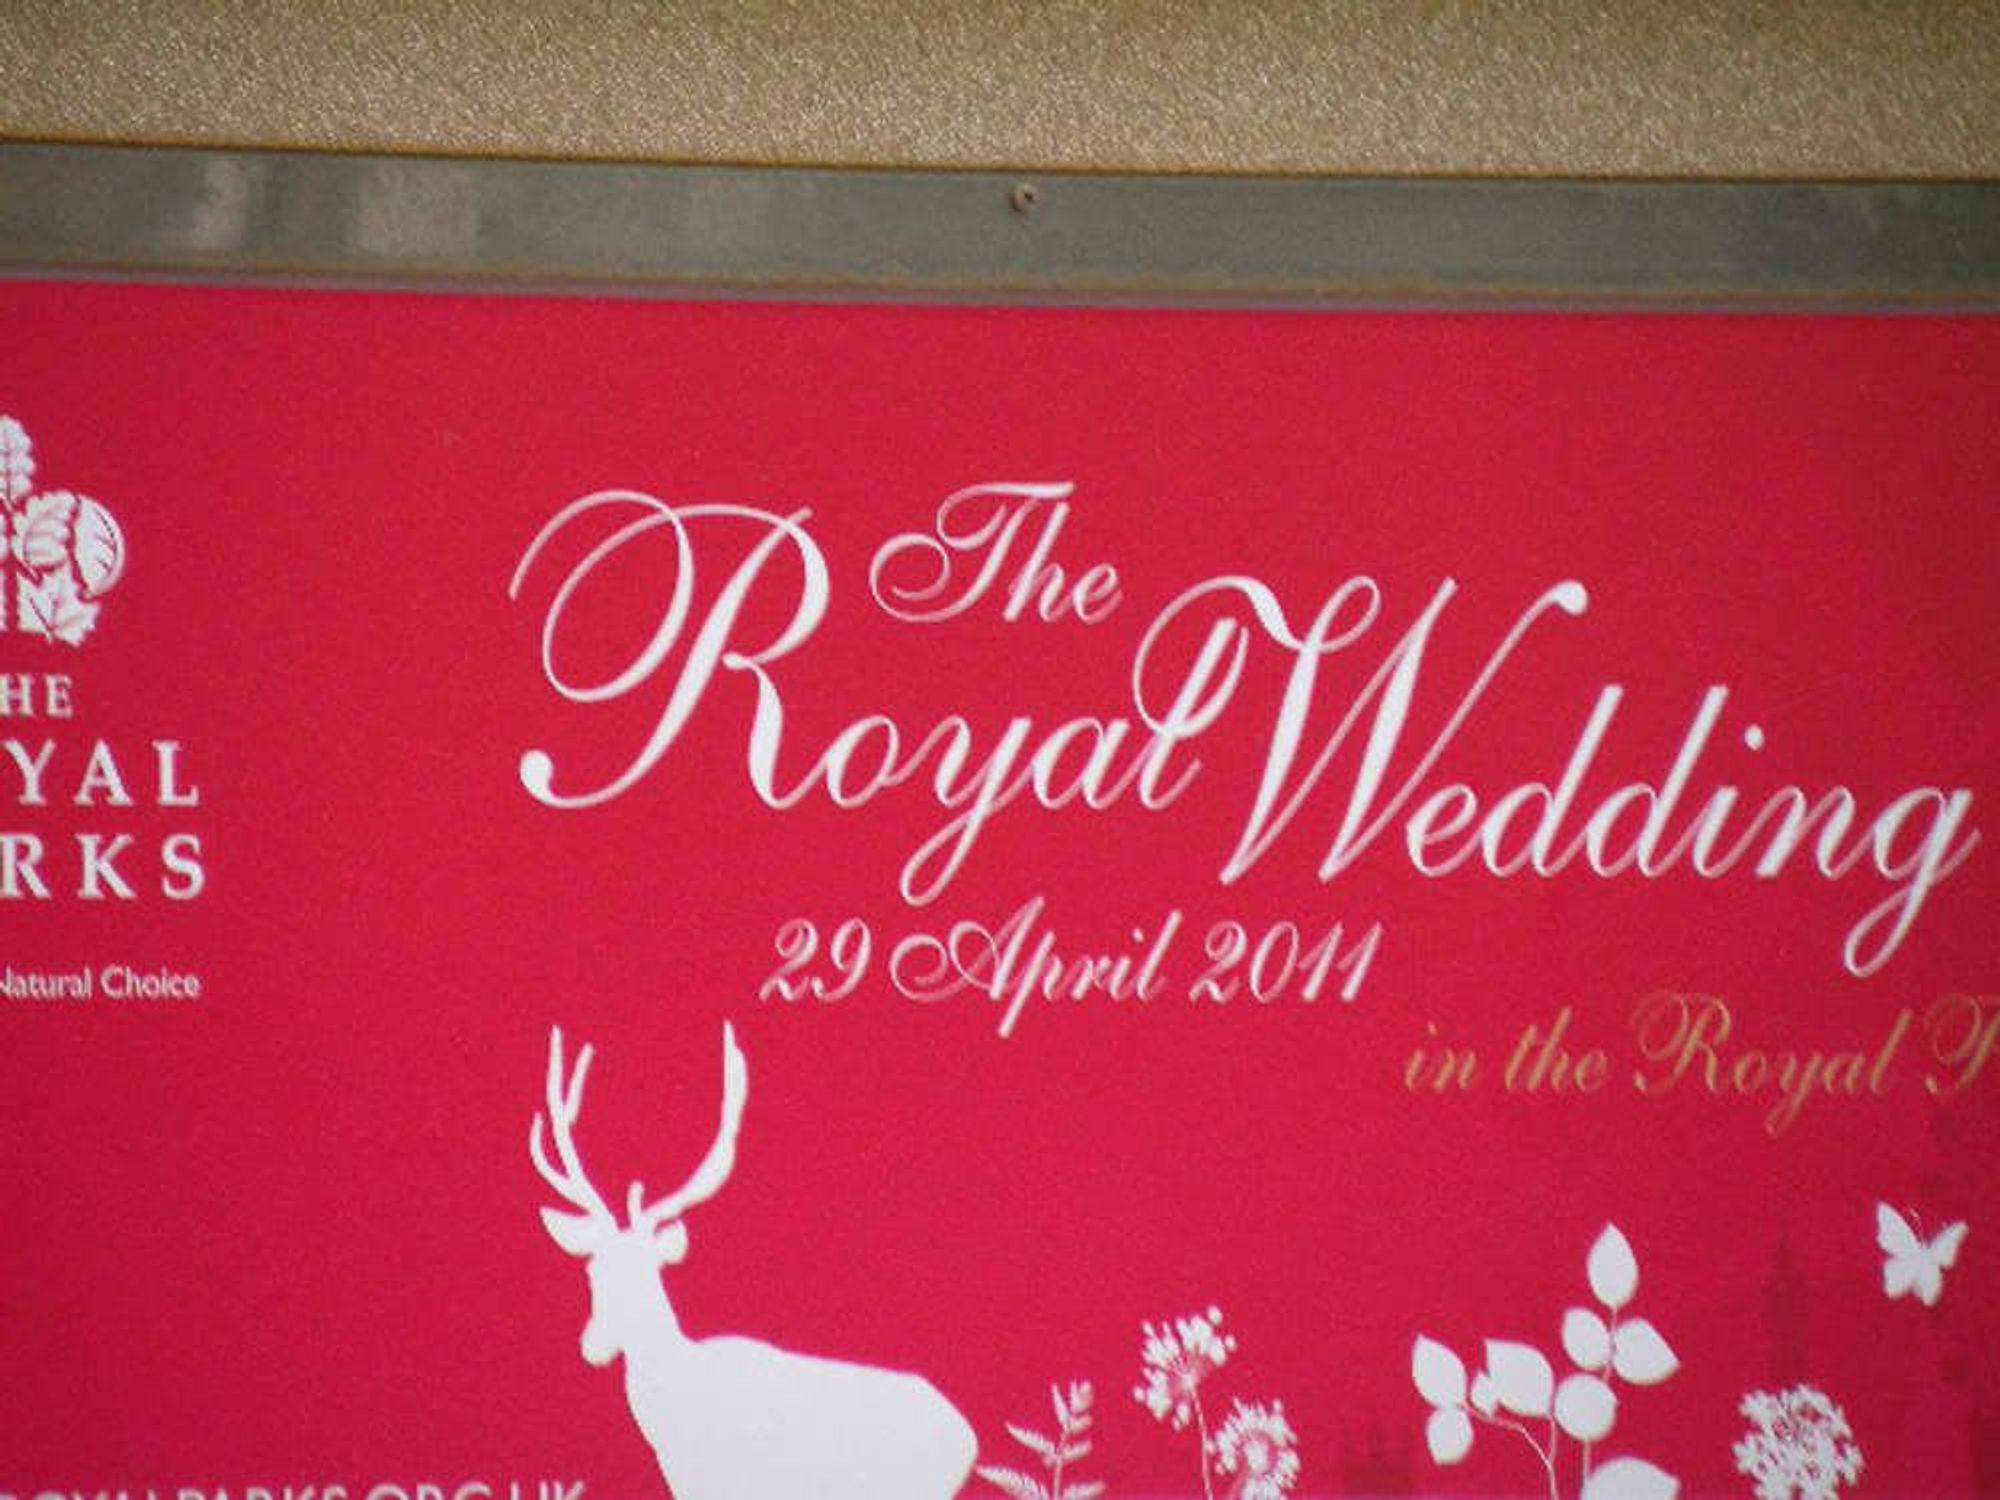 News_Royal Wedding_April 2011